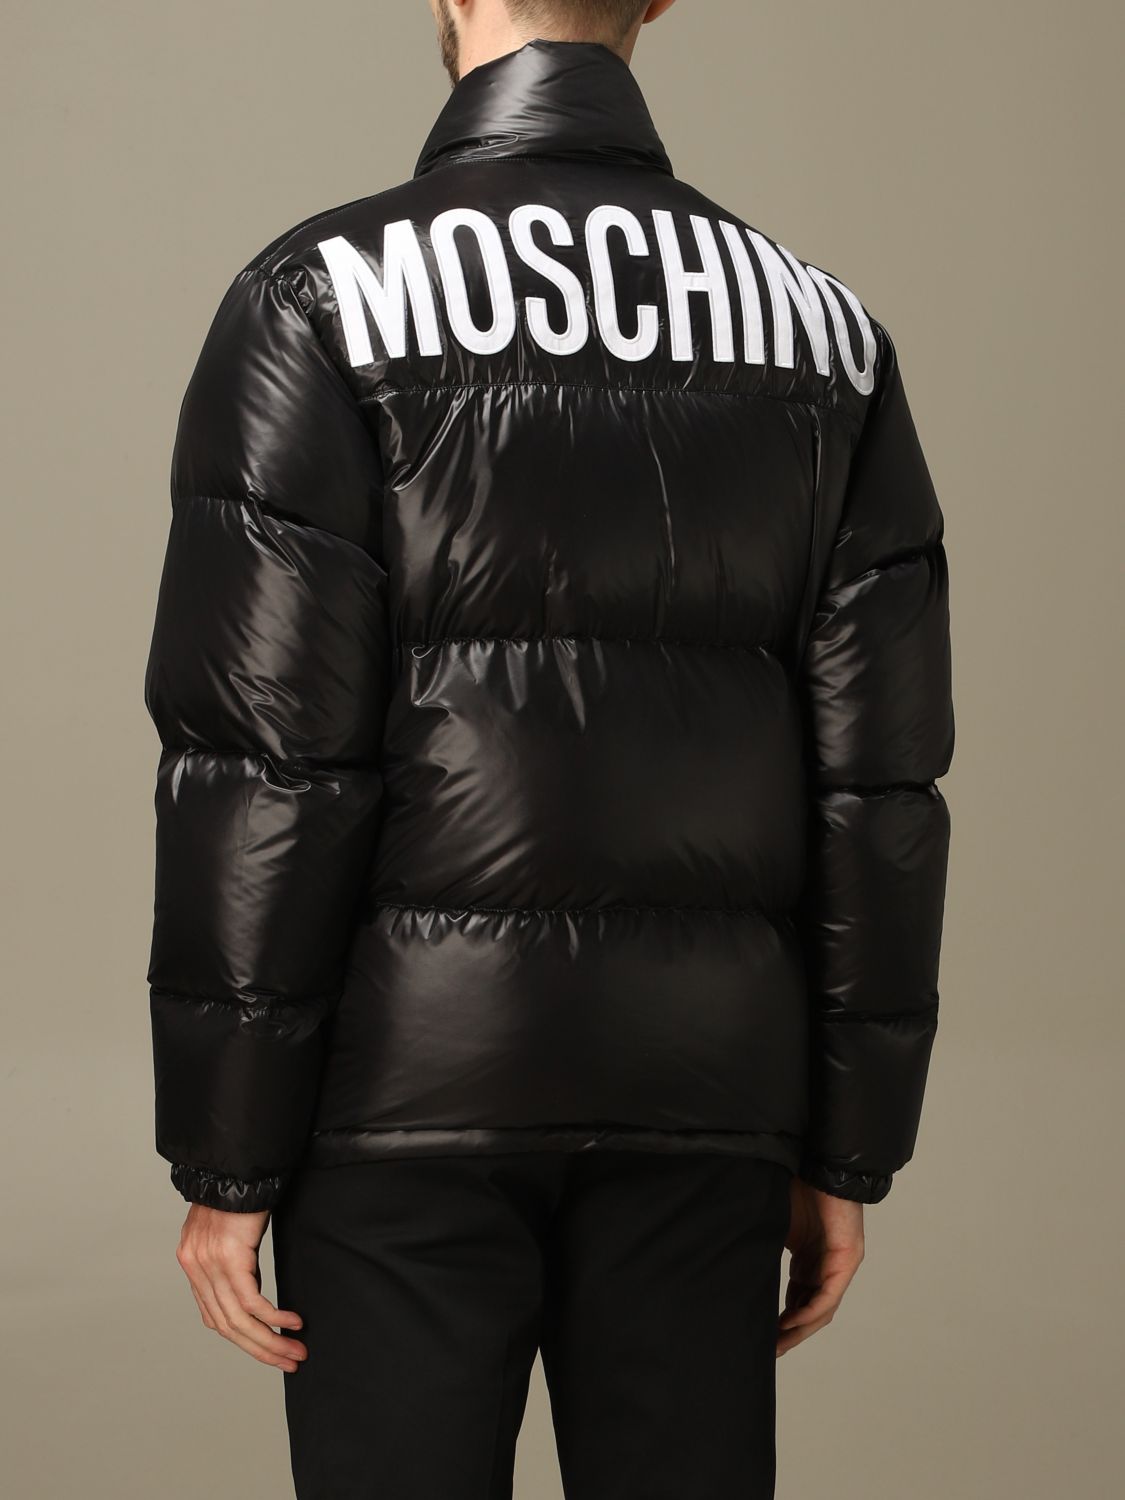 moschino mens jacket